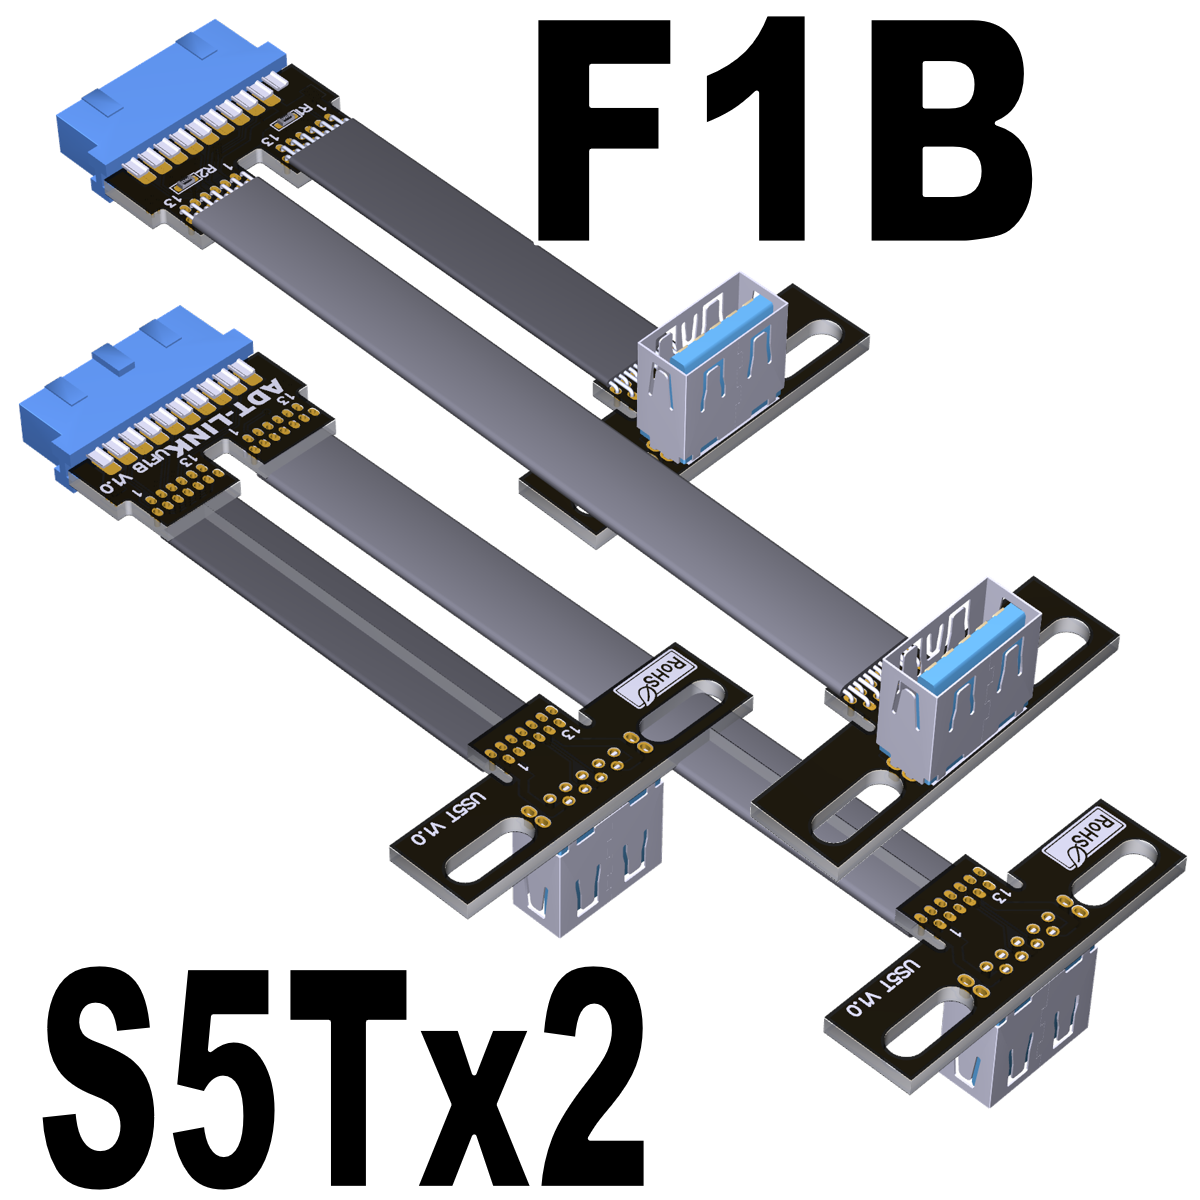 USF3-FM-13P series